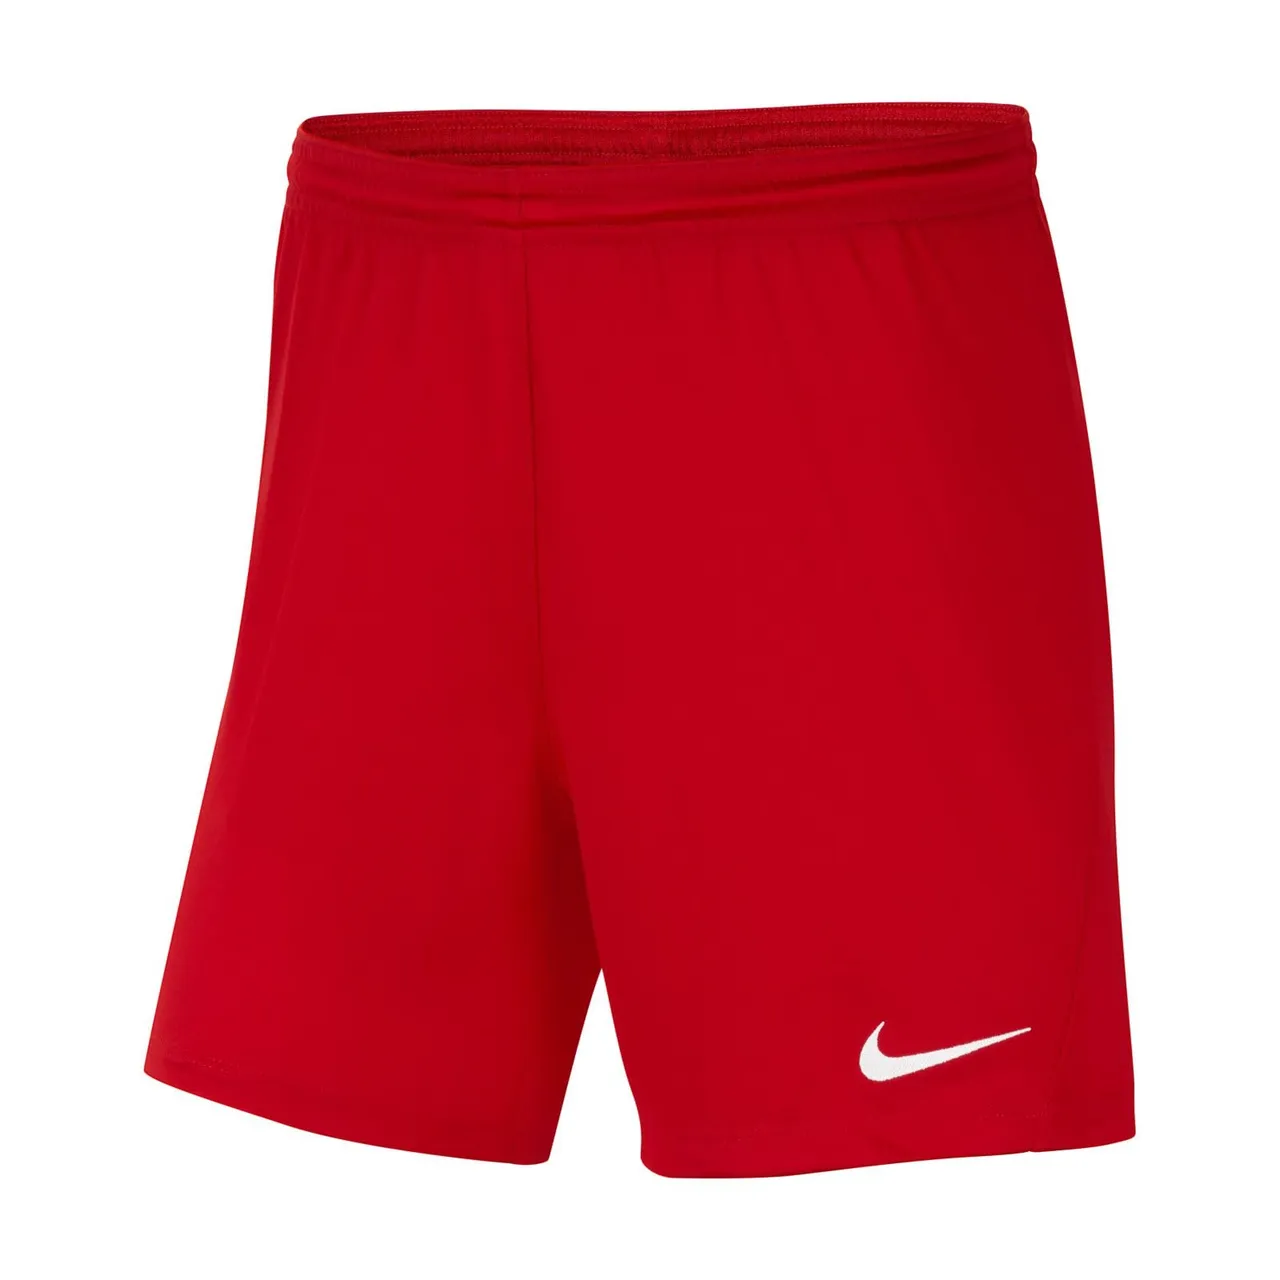 NIKE Women's Nike Women's Park Iii Knit Football Shorts